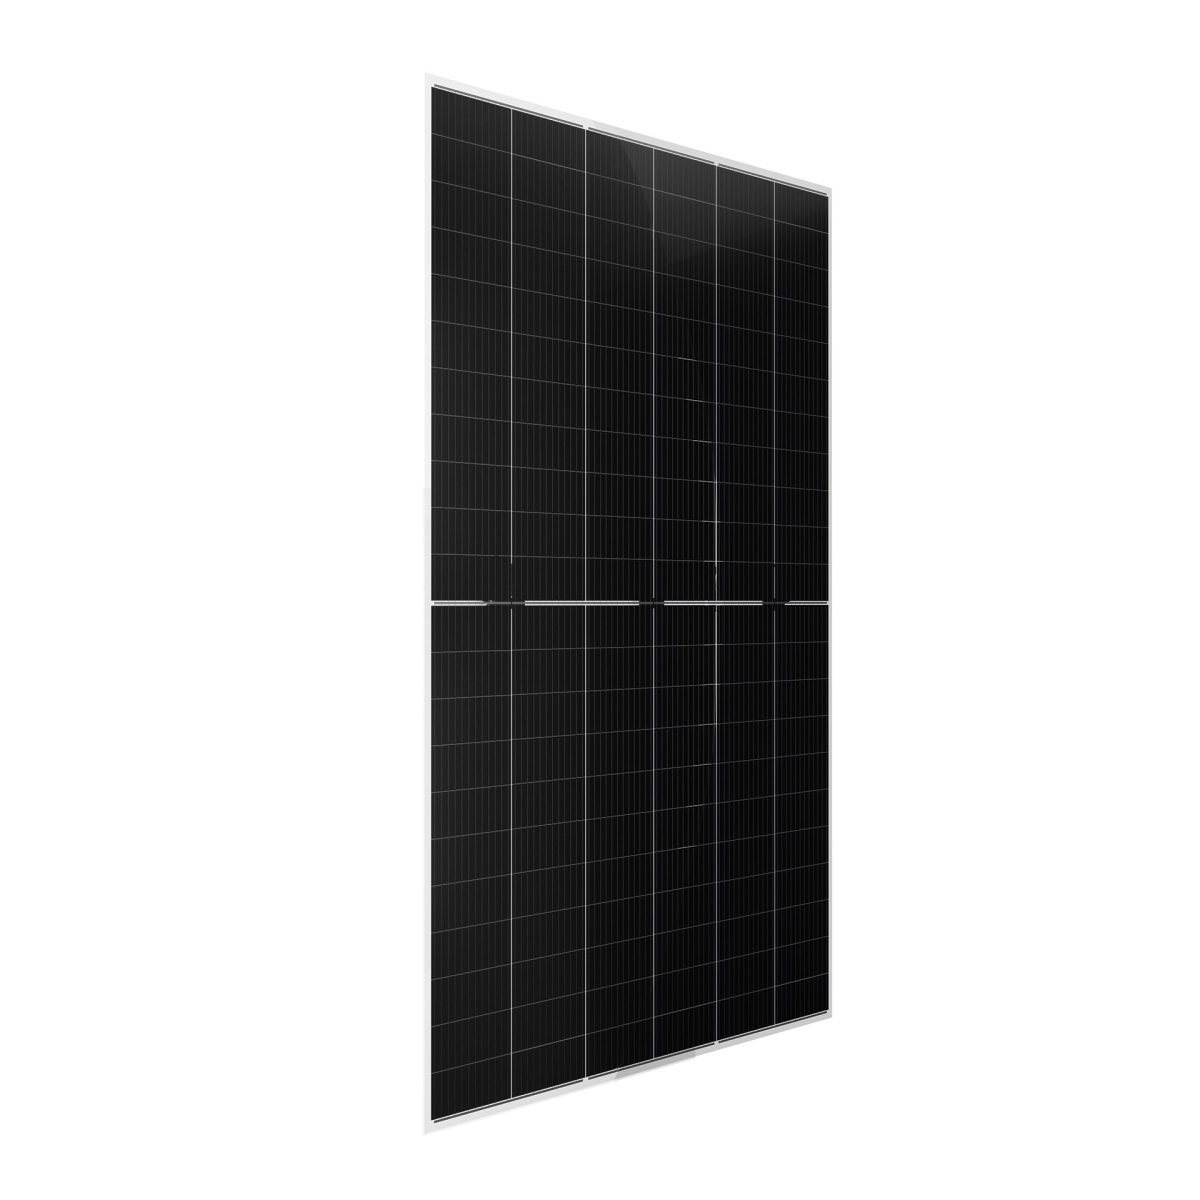 CW Enerji 655Wp M12 132PM Cells Bifacial G2G Half-Cut MB Solar Panel